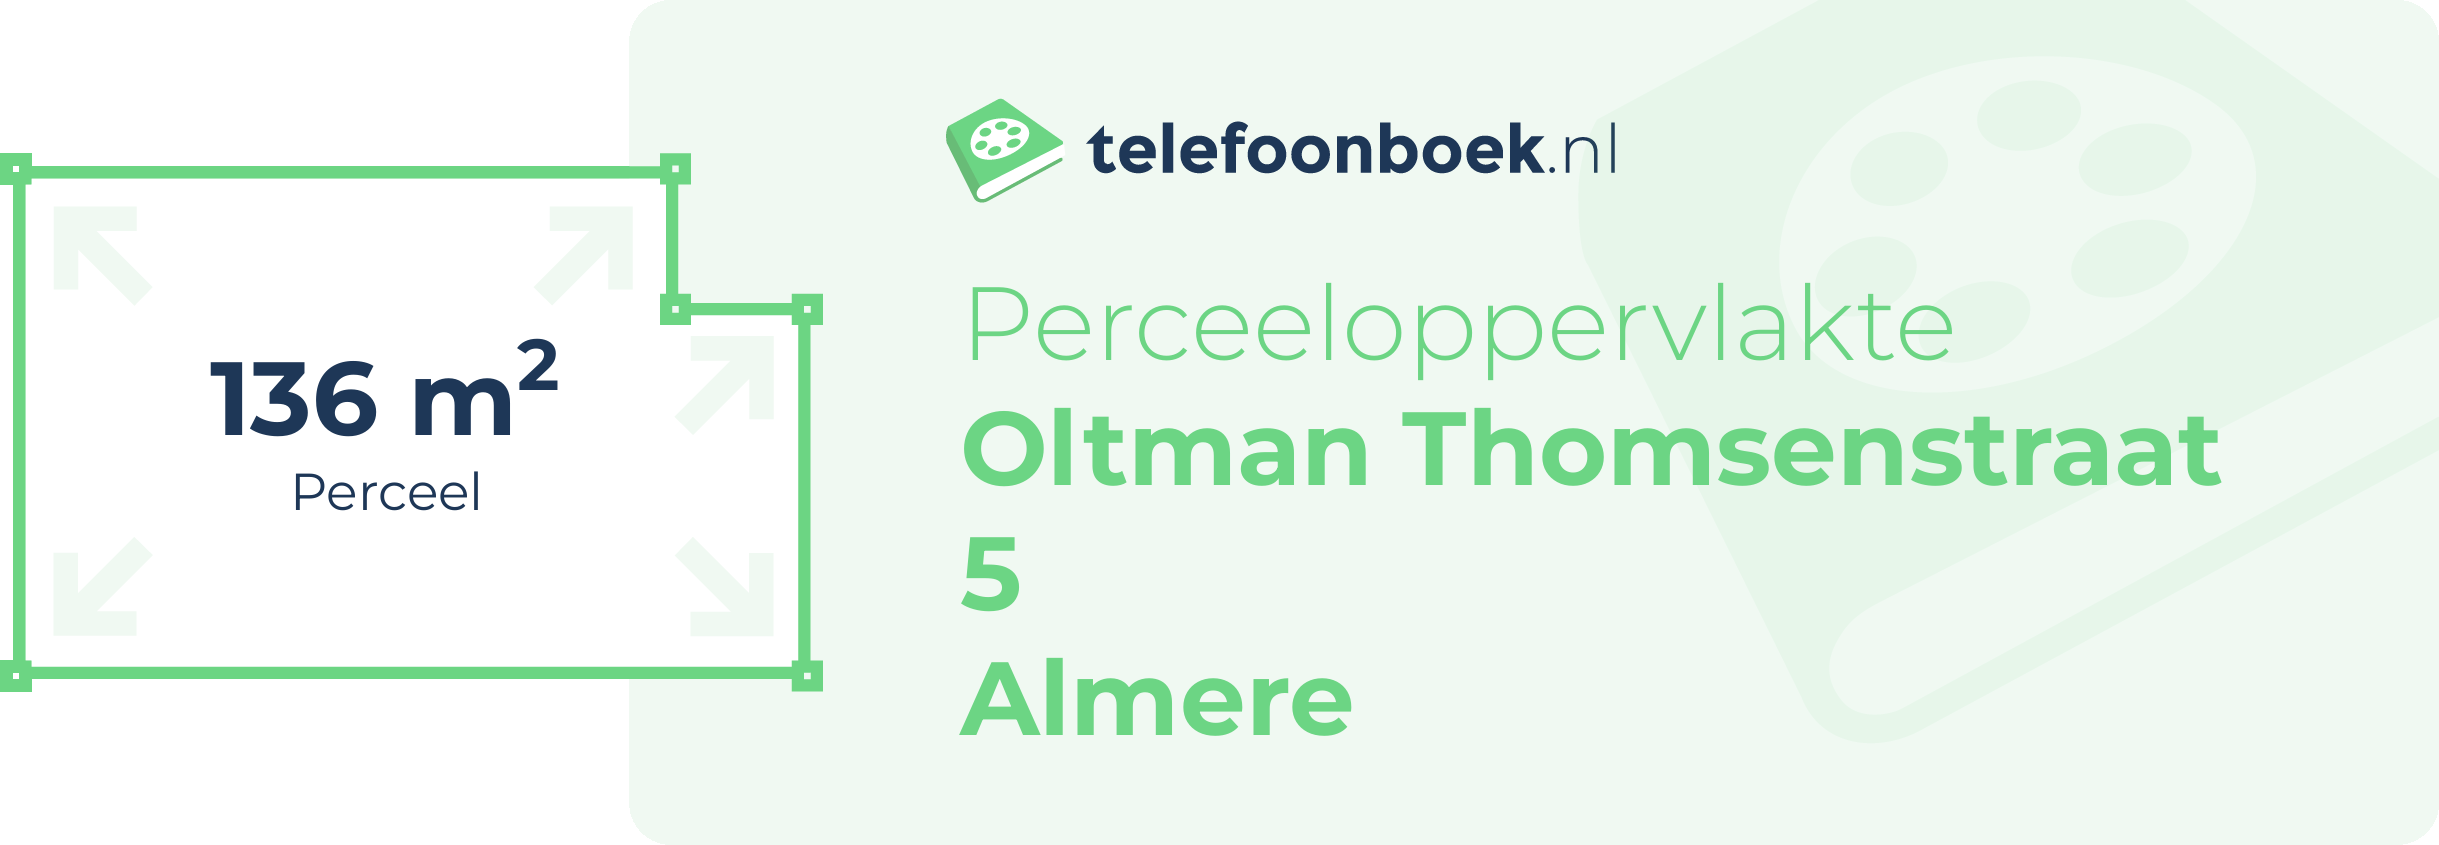 Perceeloppervlakte Oltman Thomsenstraat 5 Almere